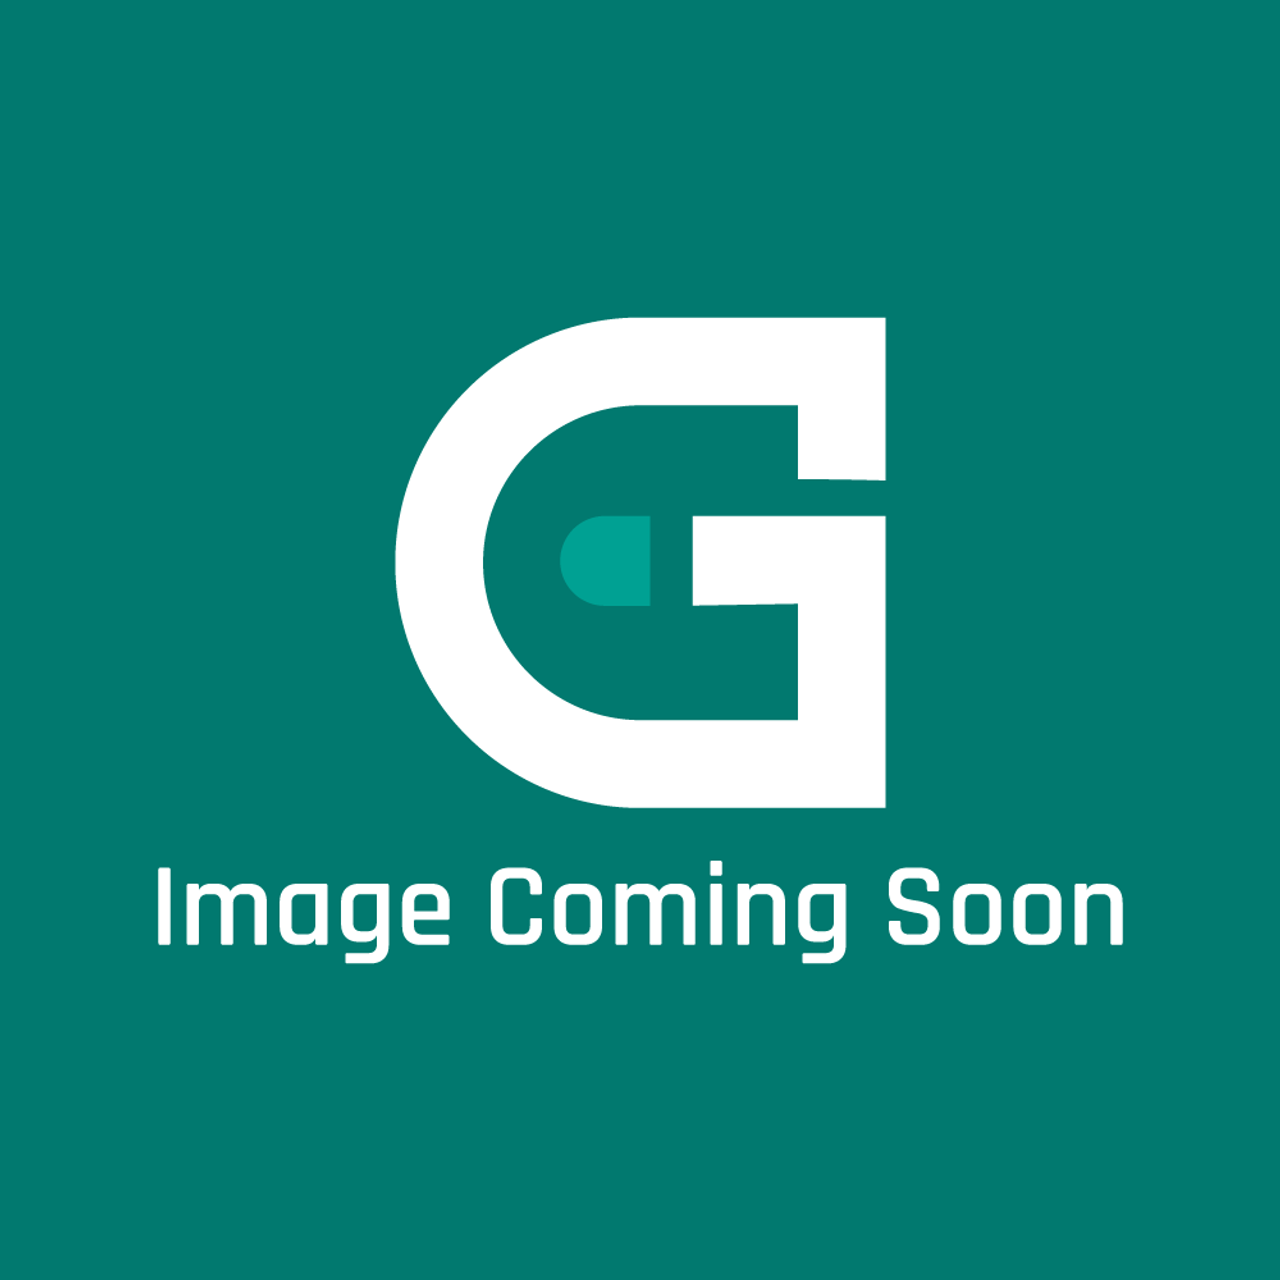 GE Appliances WB63K16 - Range Panel - Image Coming Soon!